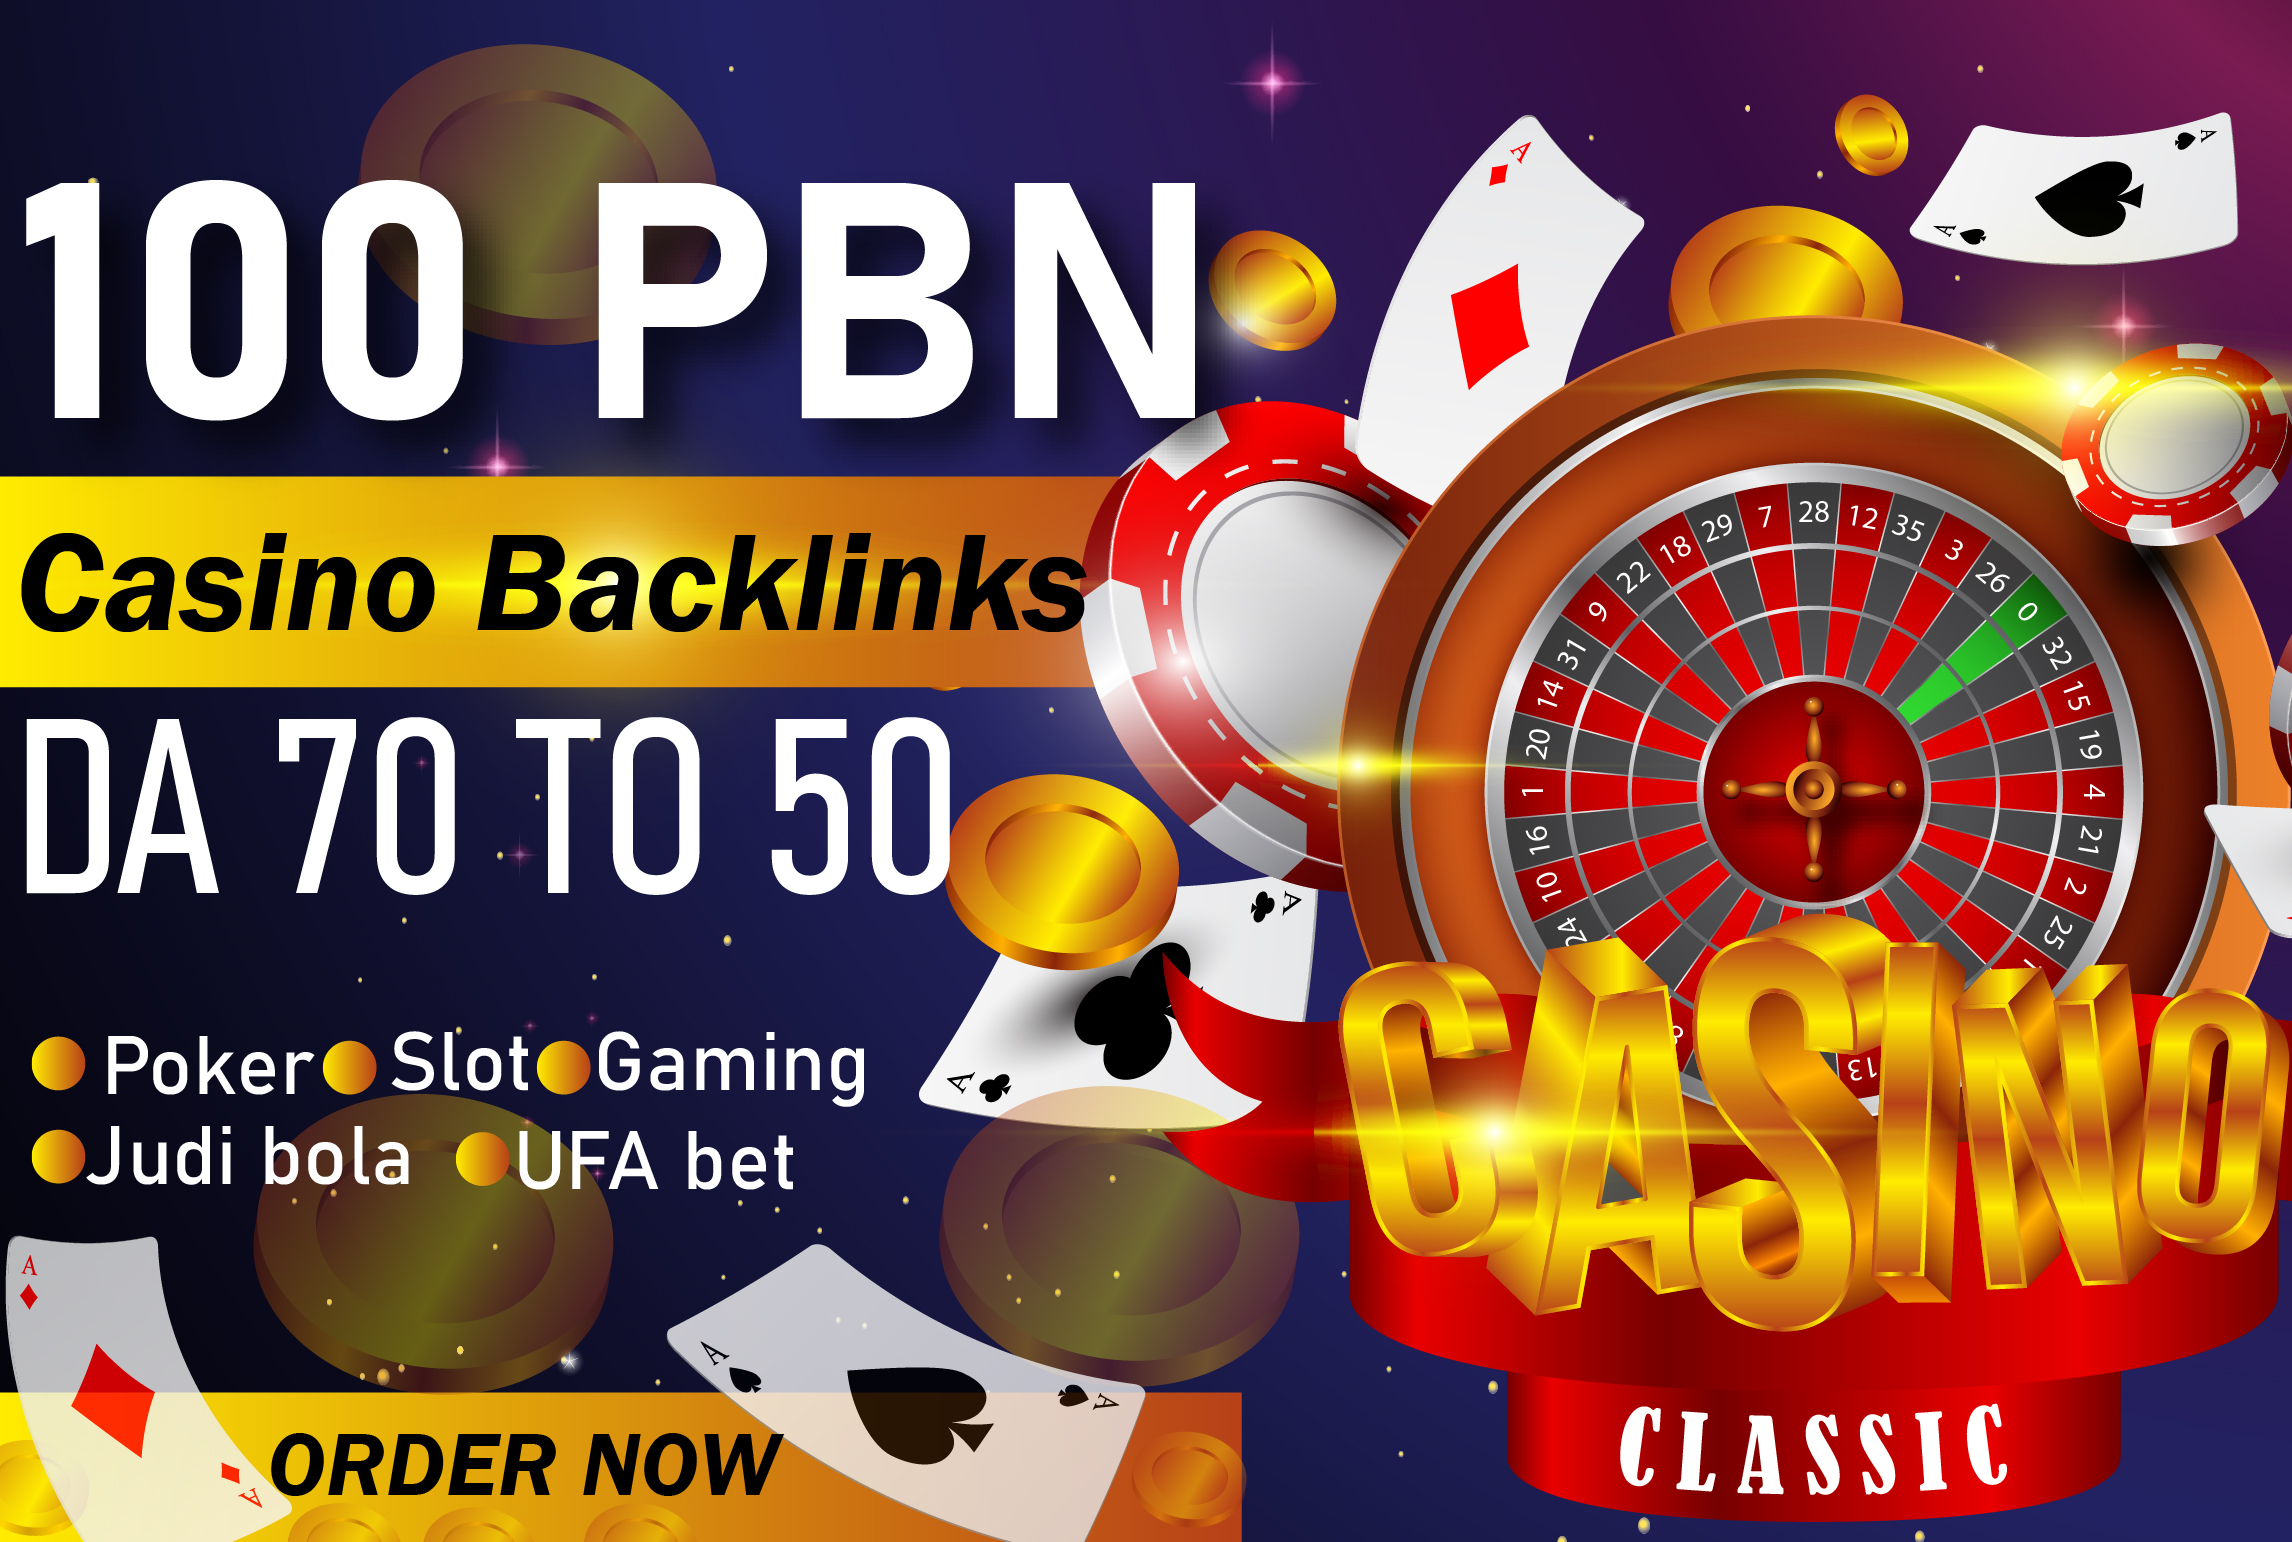 100 JUDI BOLA, CASINO, POKER, GAMBLING, DA50-70 PBNs Post Boost Website Ranking Highly Recommended